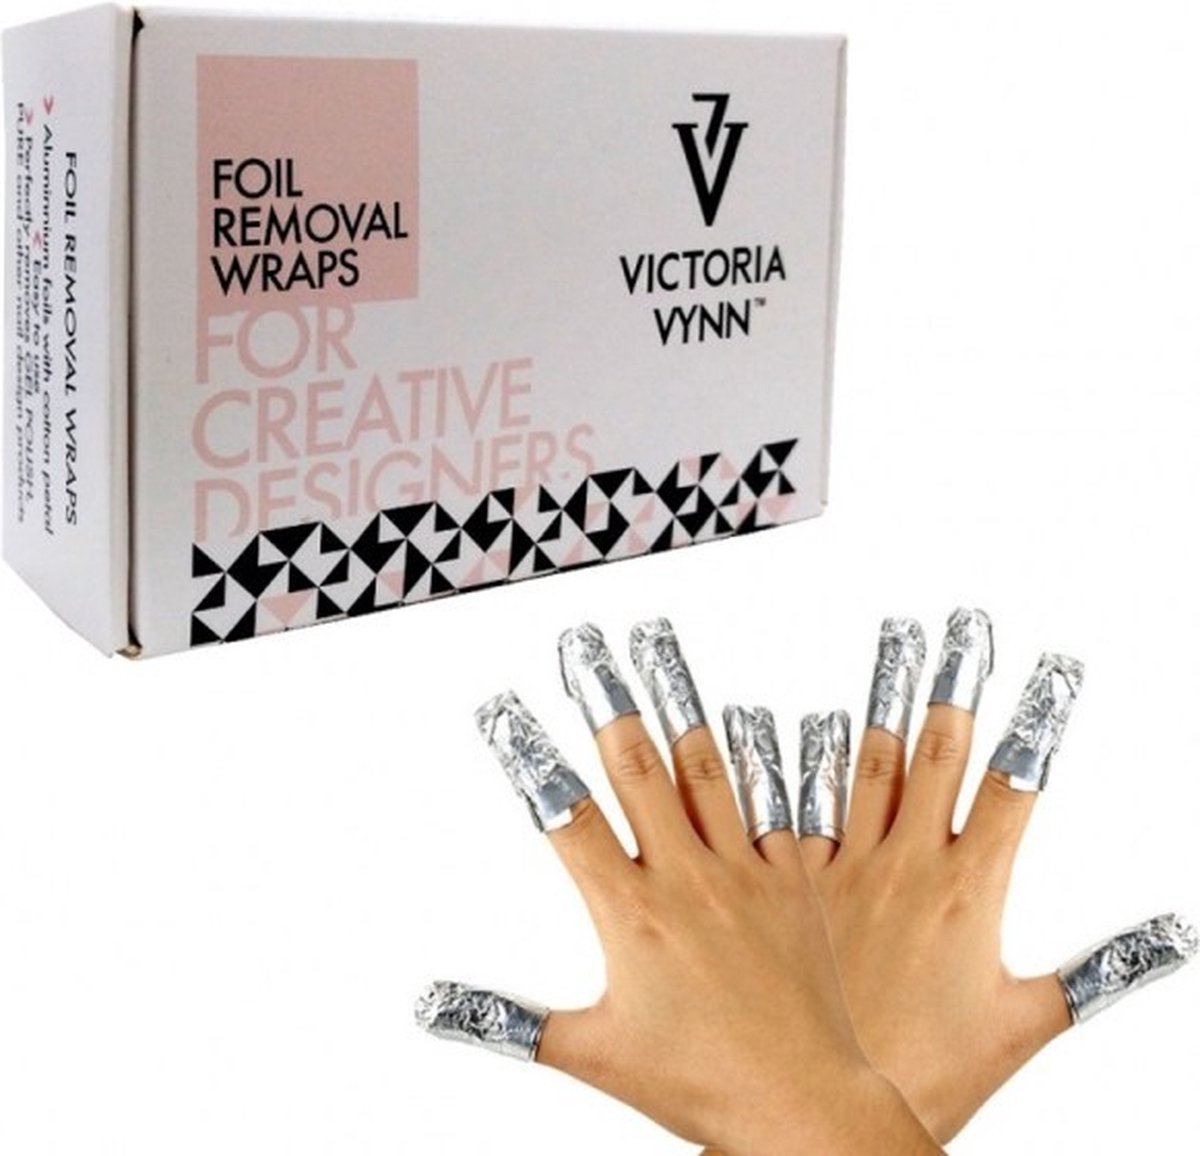 Victoria Vynn Foil Removal Wraps